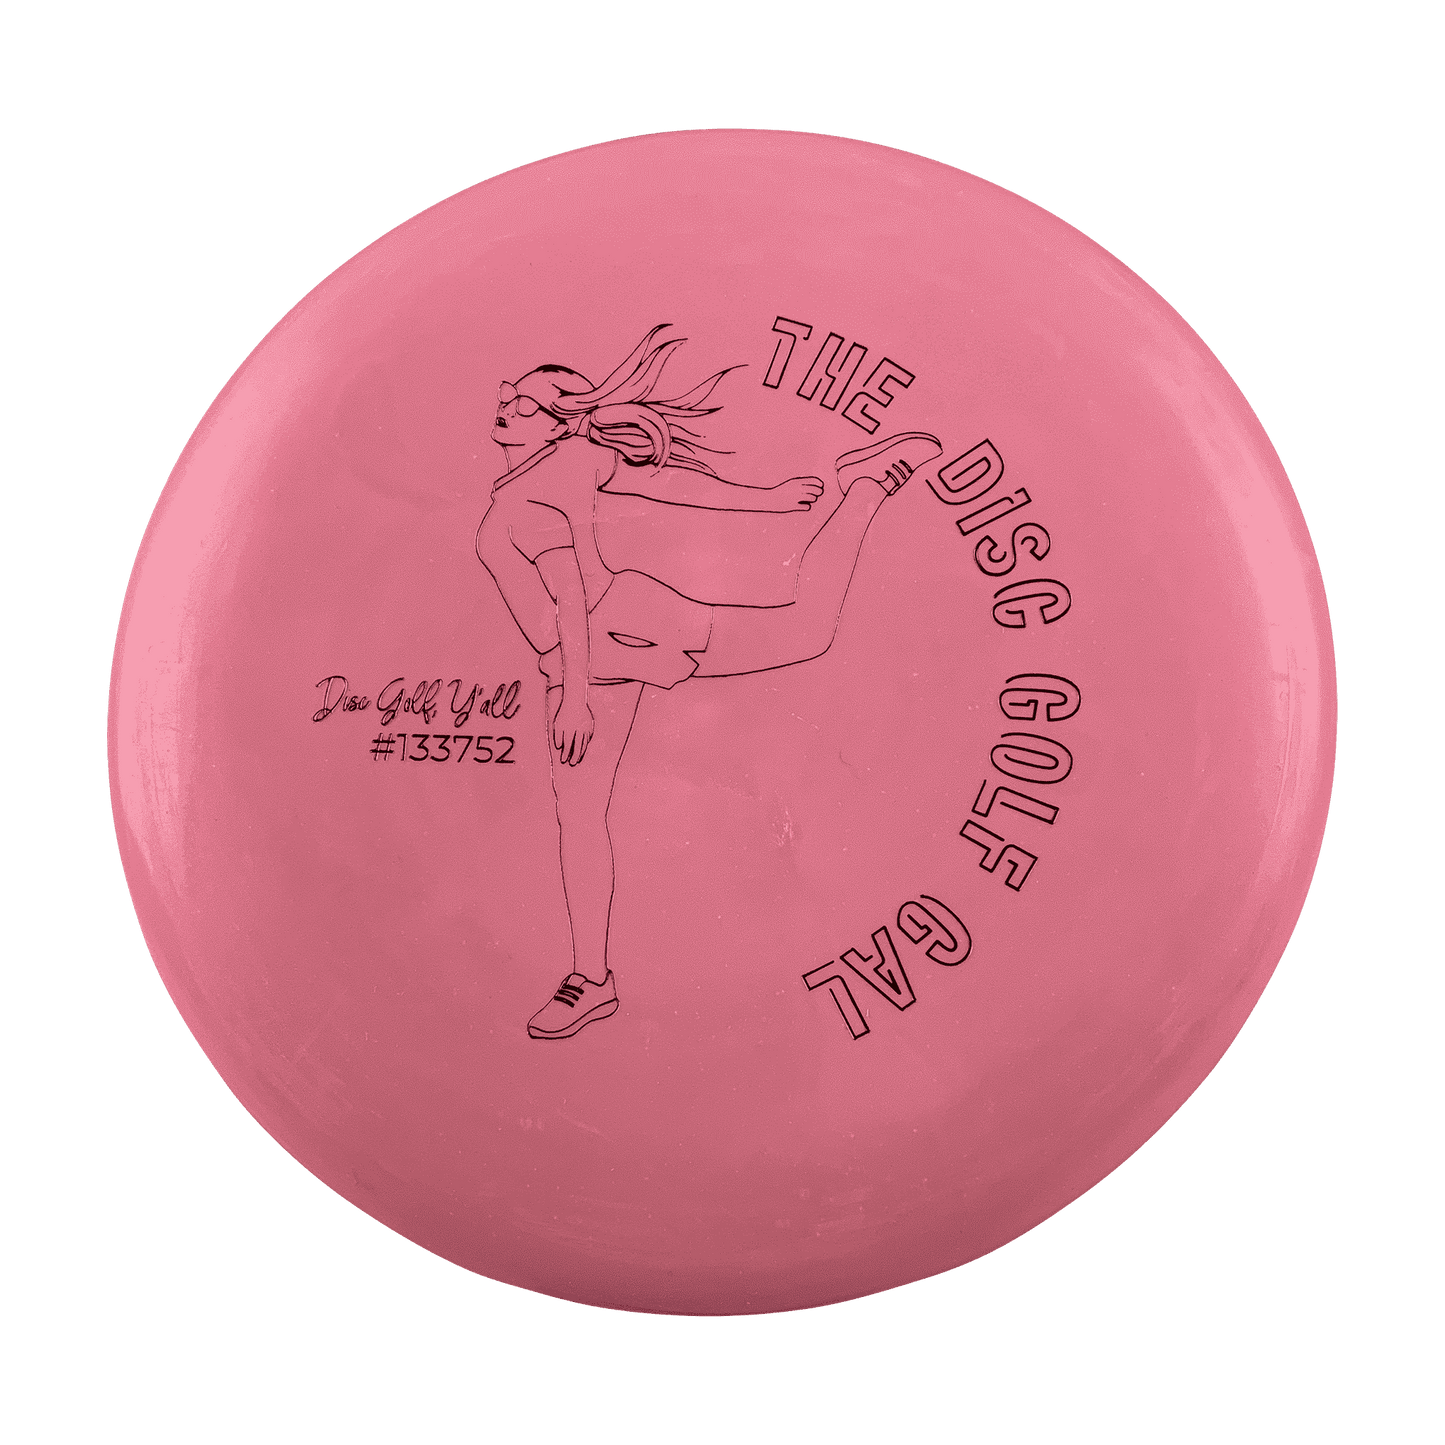 Firm Phi - Sierra Buford 2023 Signature Disc Disc EV-7 pink 174 